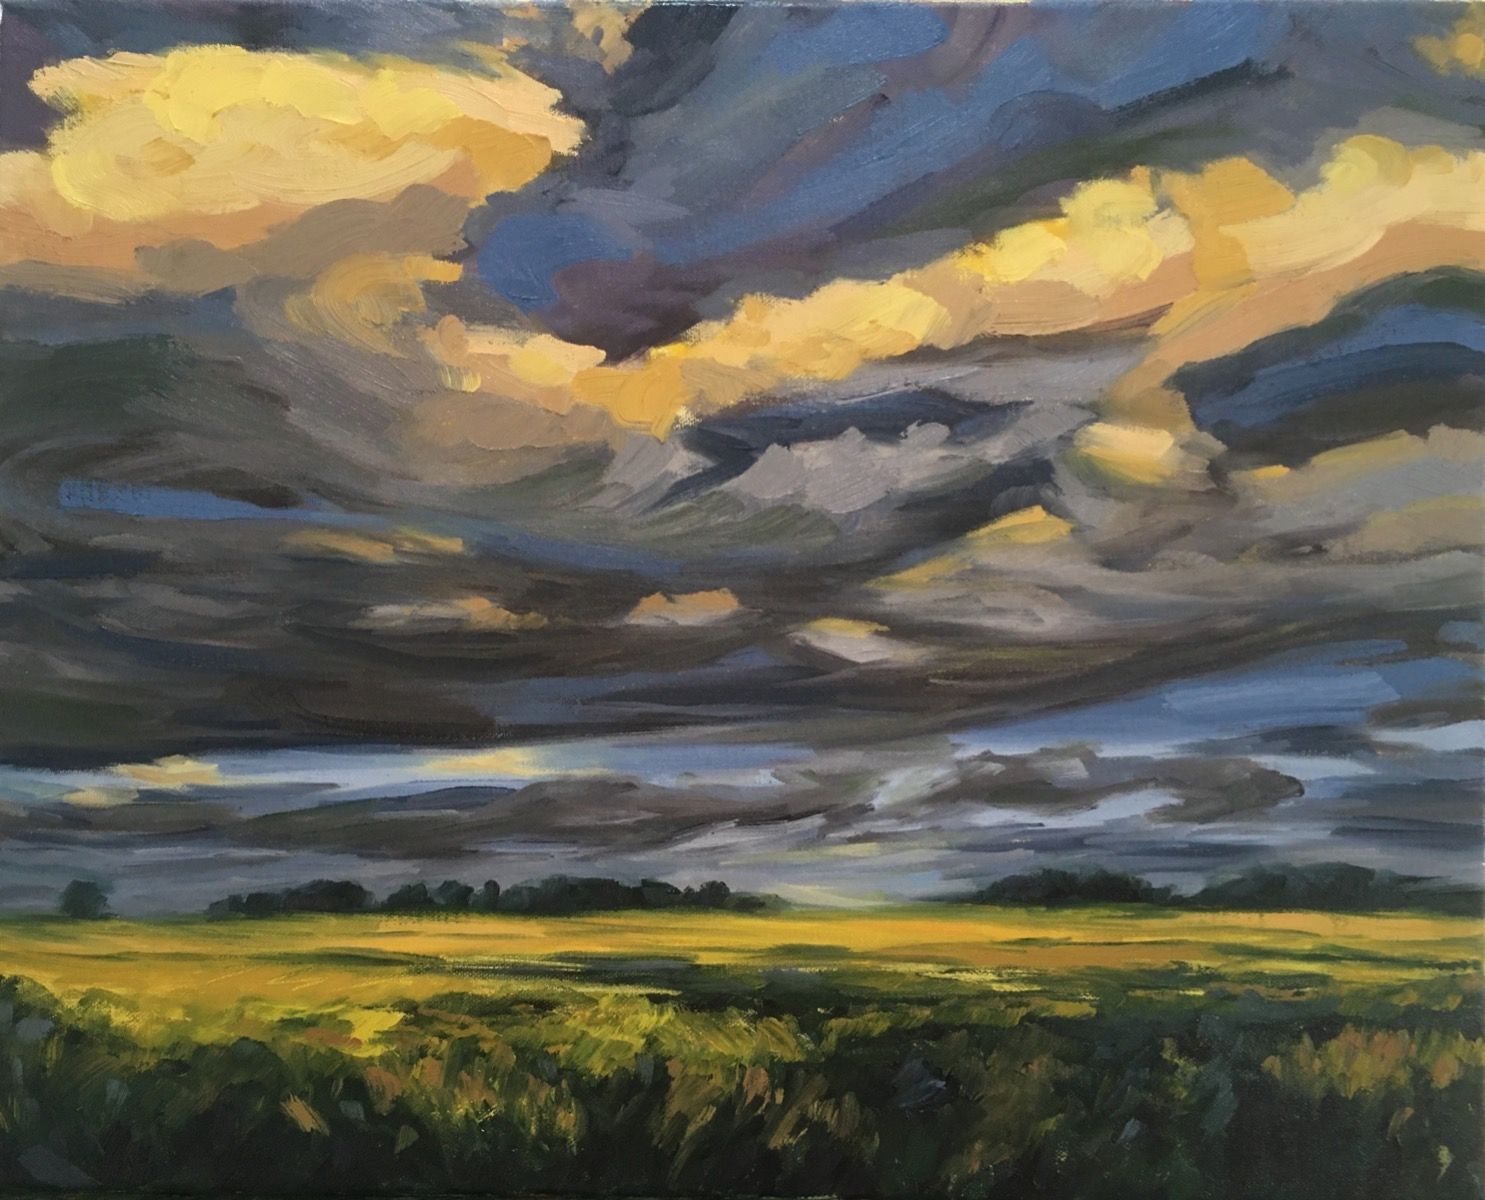 Evening Light Over The Wheatfield by Suzanne Winn